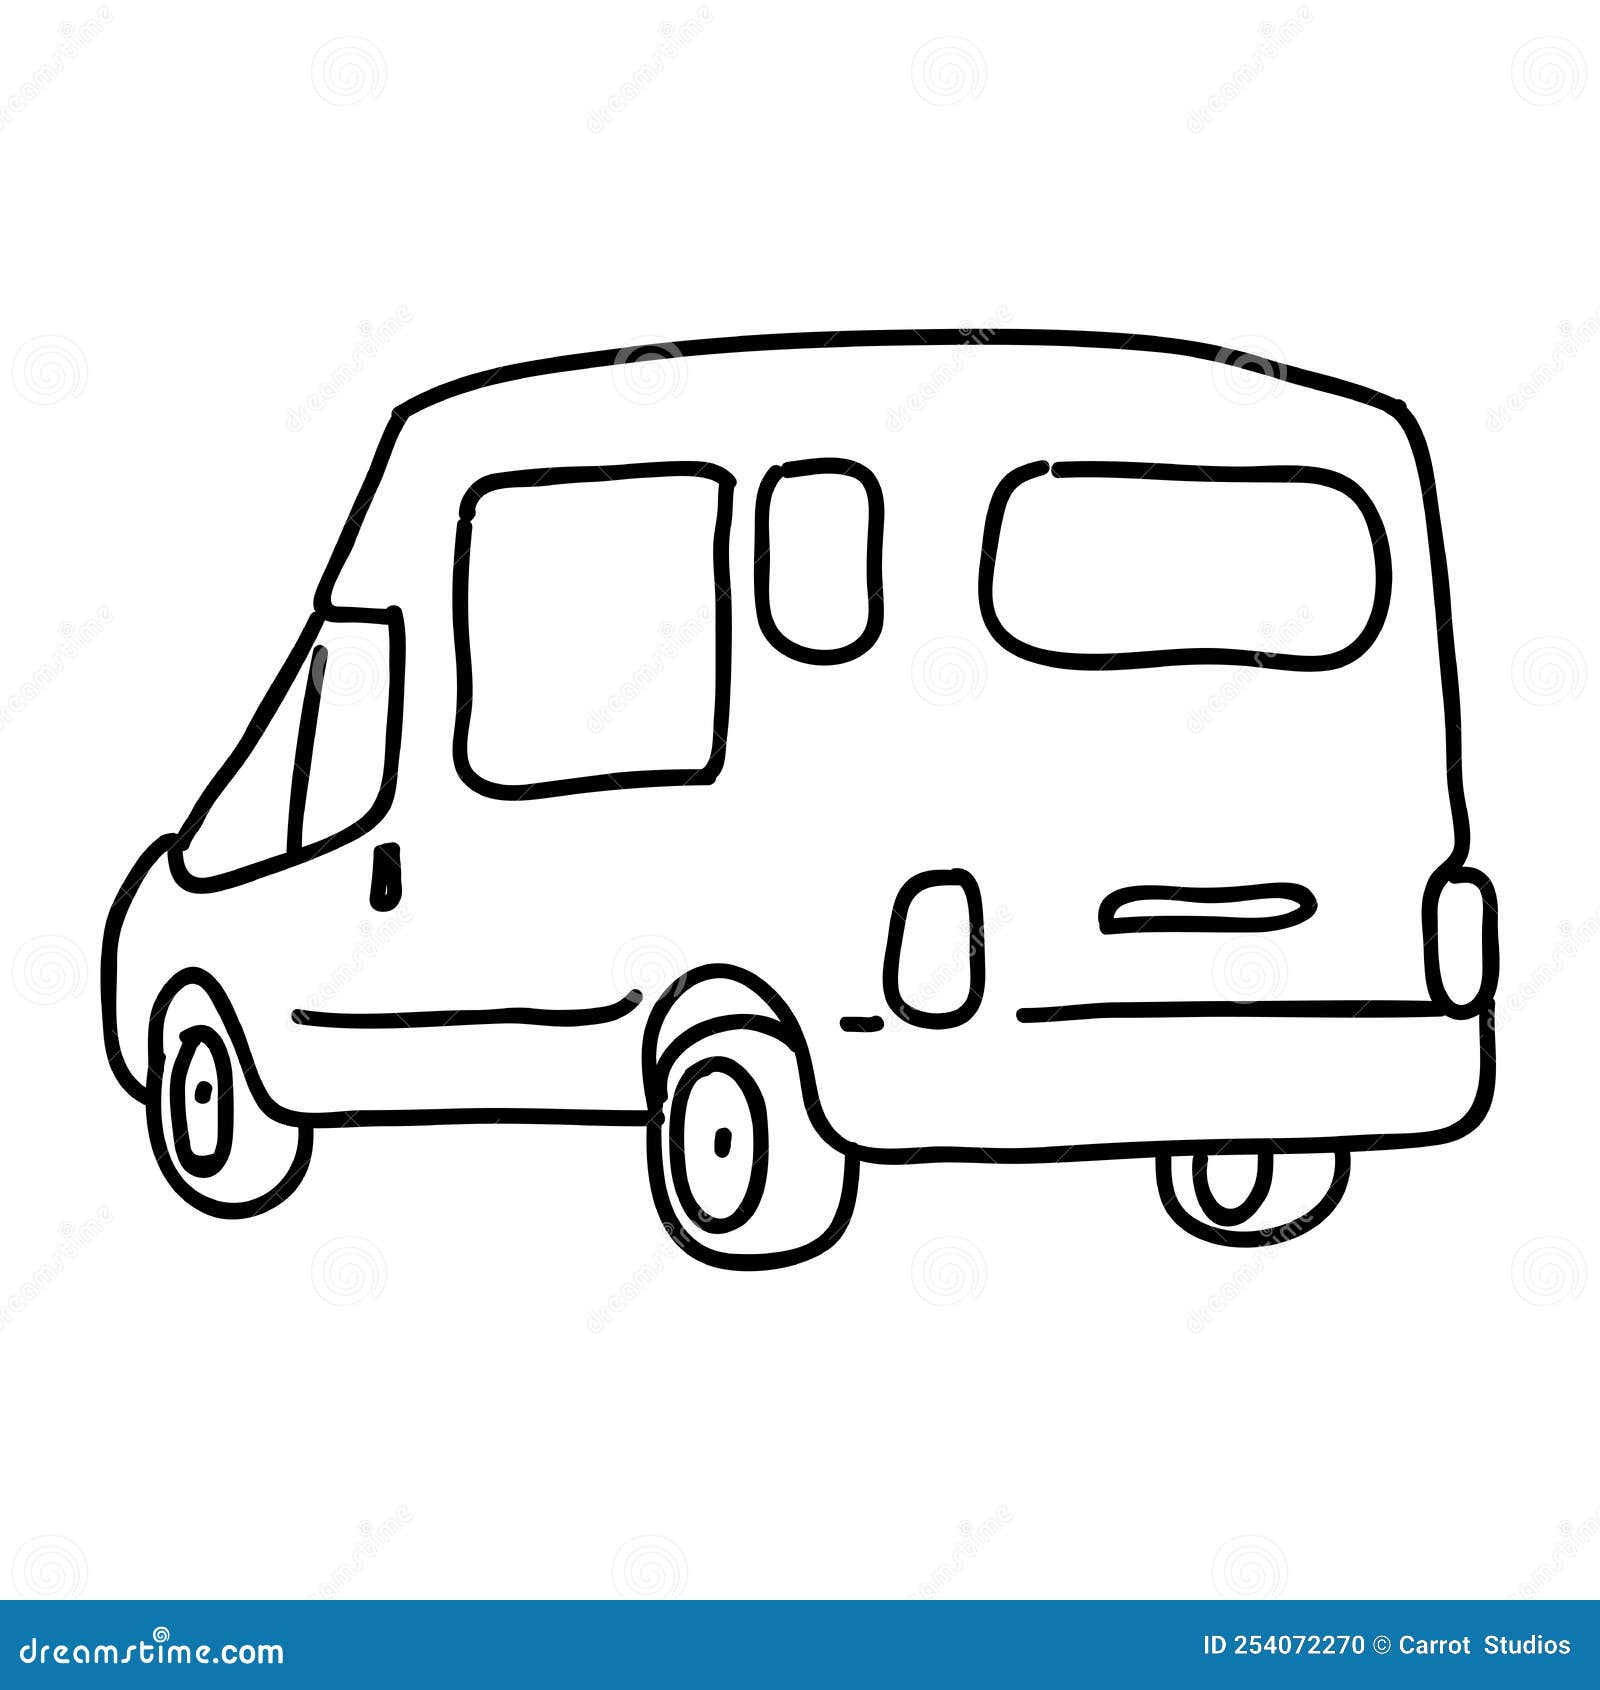 Van drawing stock vector. Illustration of design, hand - 254072270